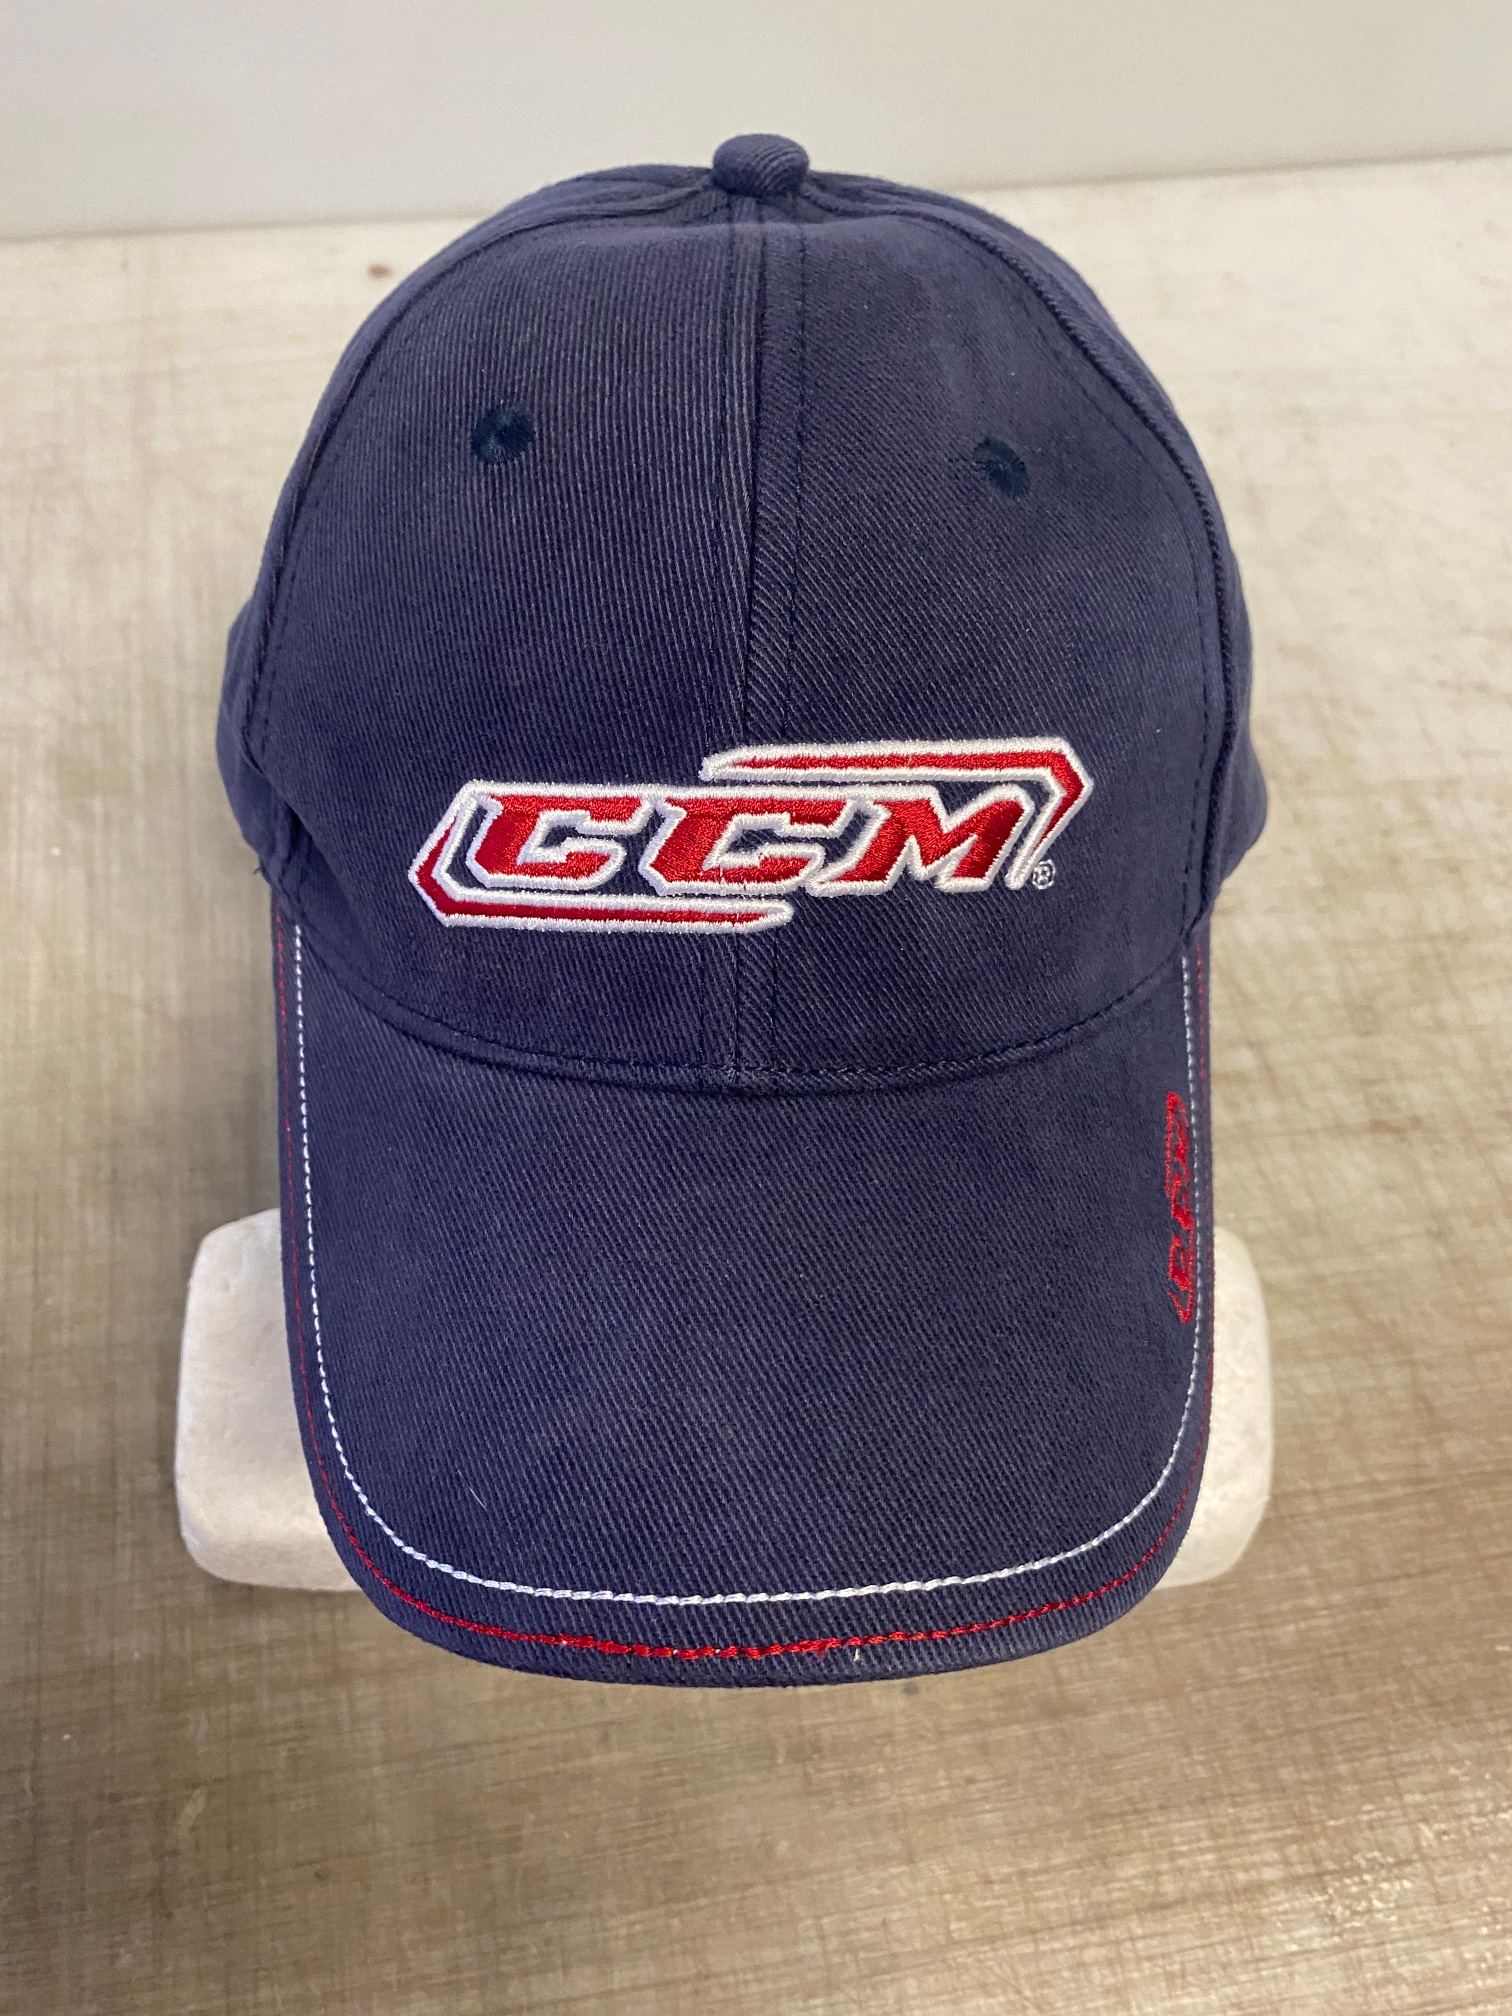 CCM Hockey Hat One Size Adult